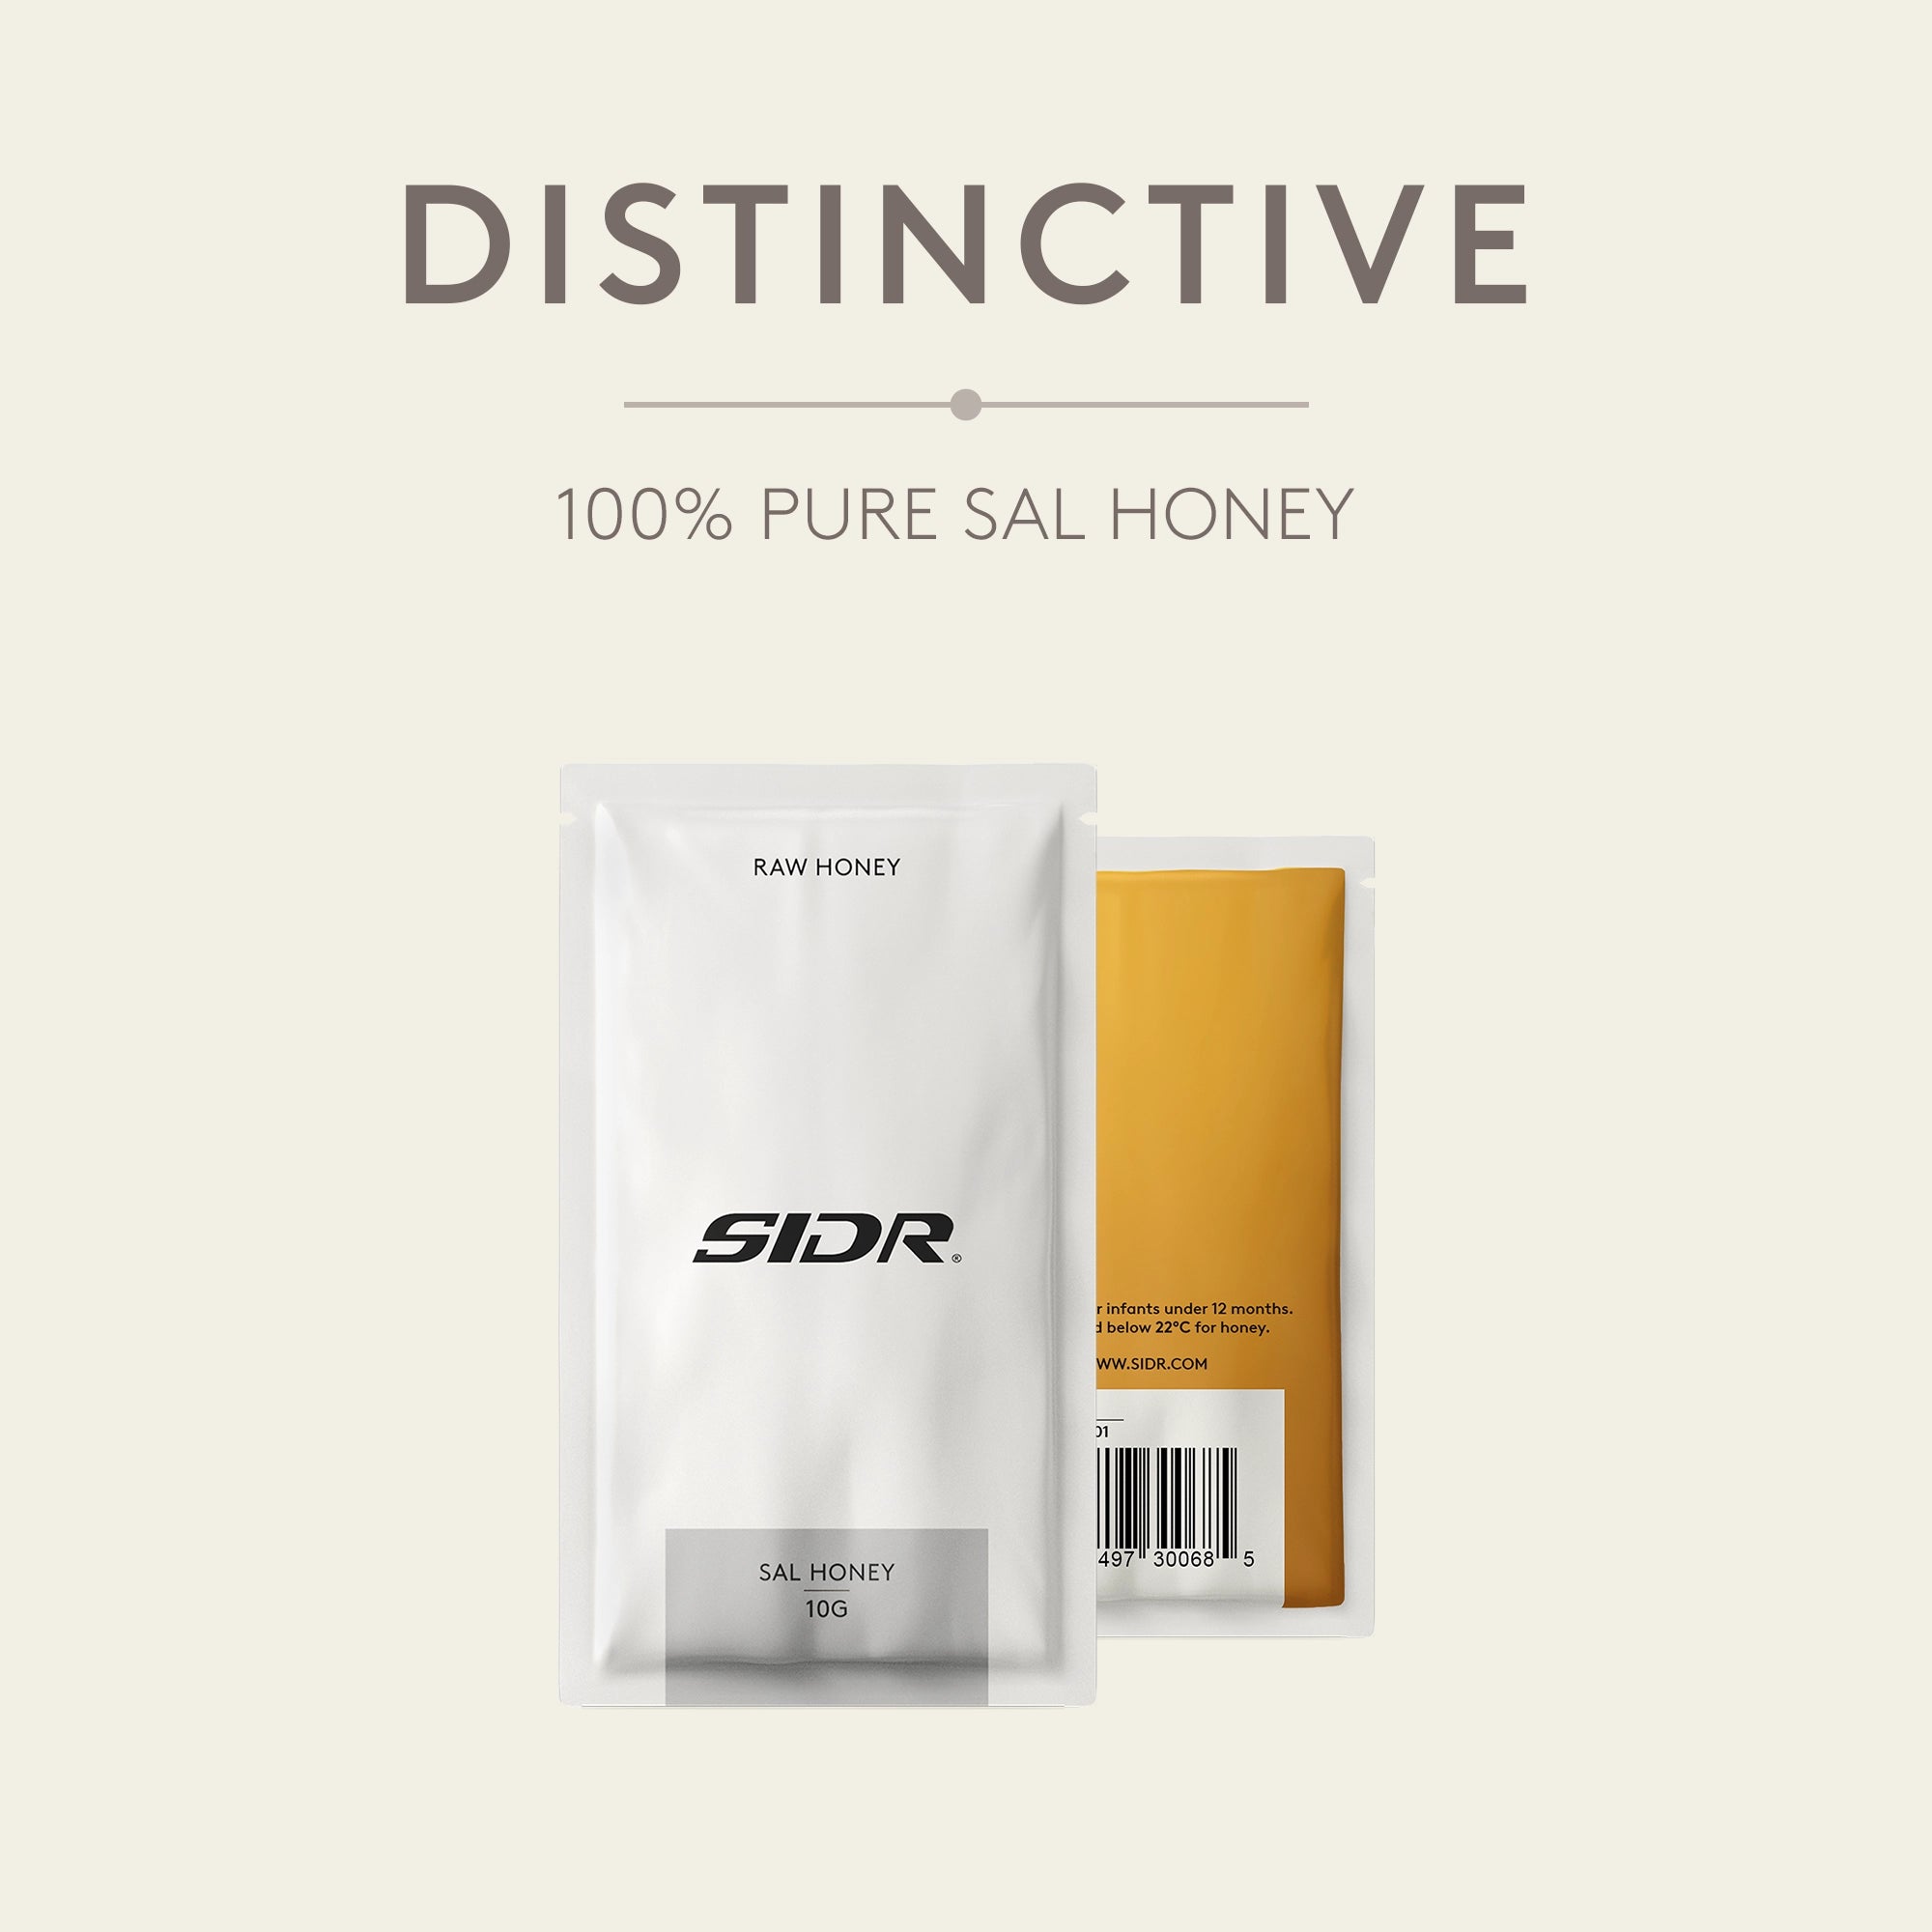 sal honey packet distinctive